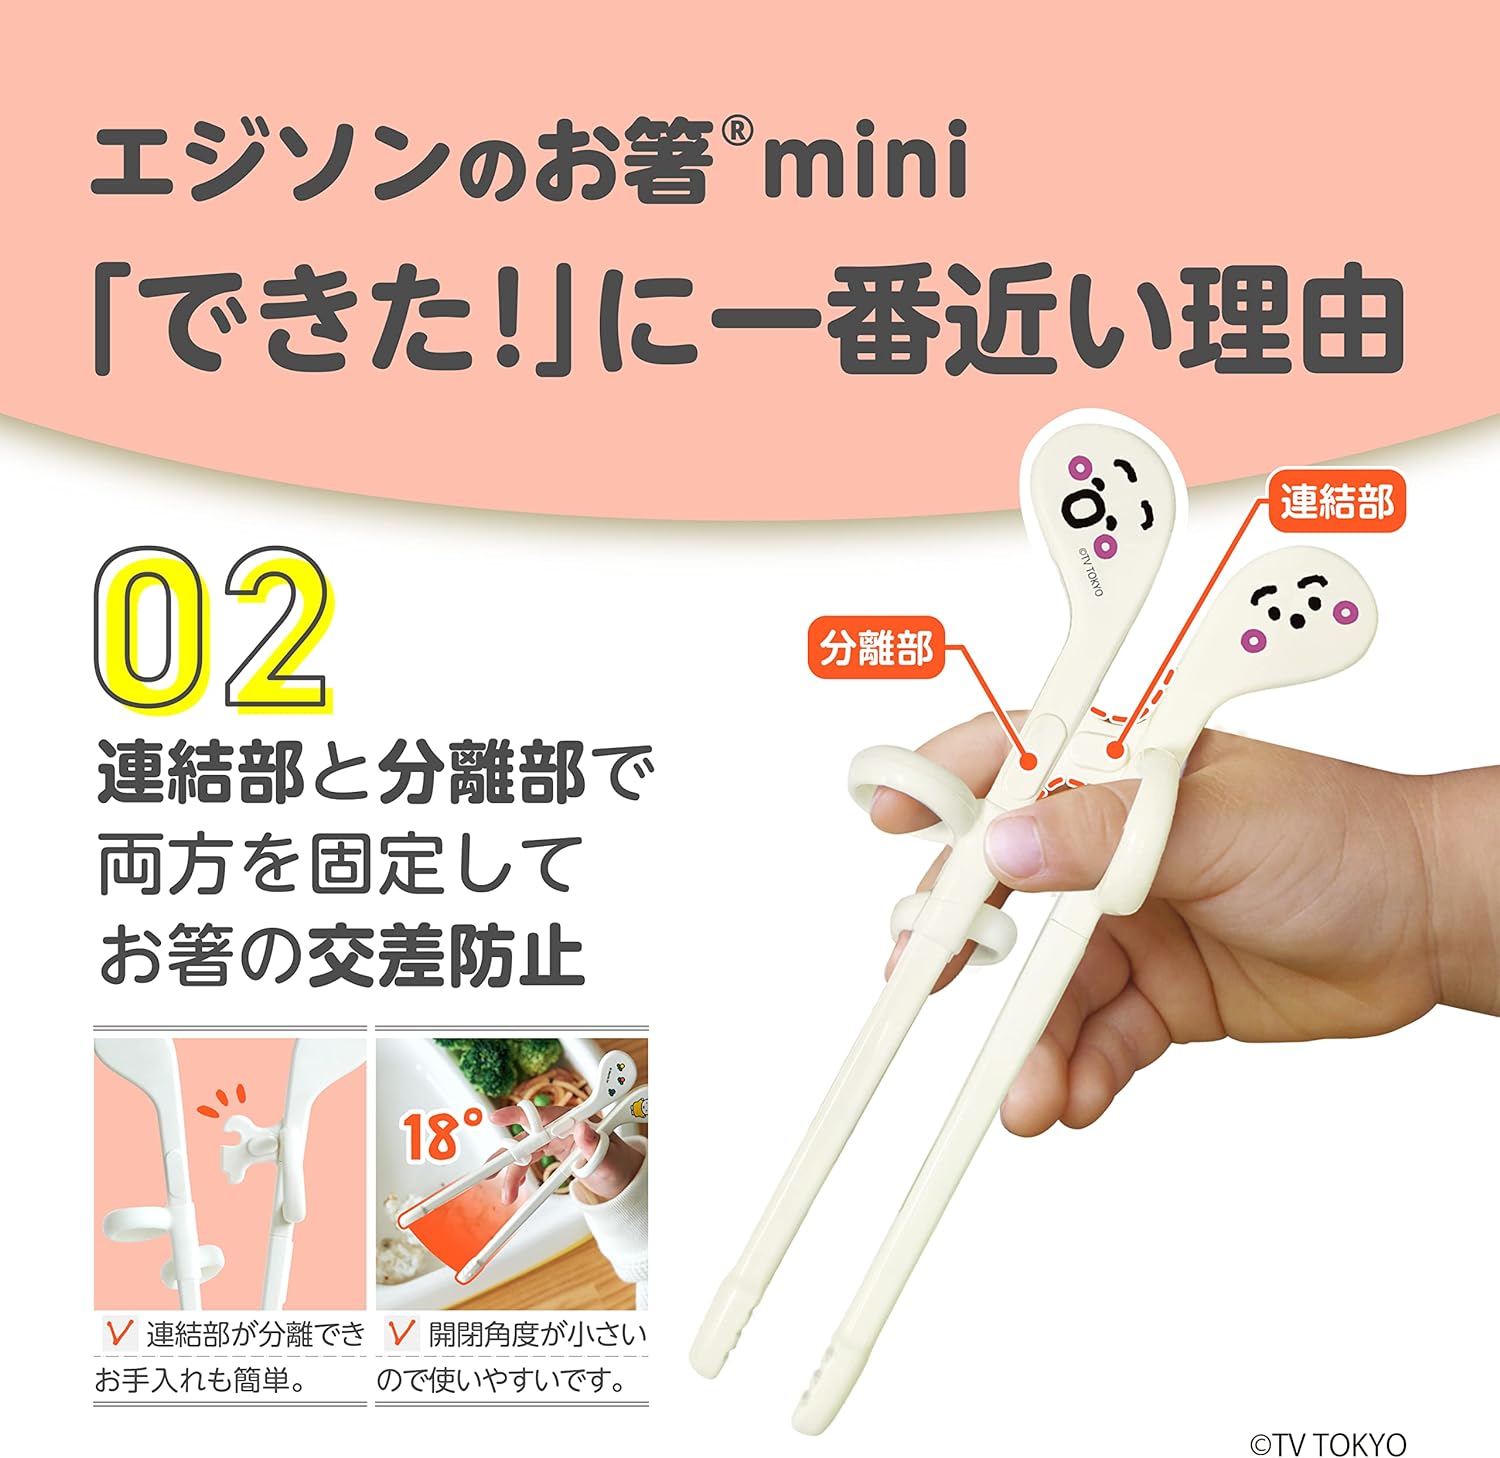 EDISON mama Chopsticks Mini Series For Ages 1.5 14cm Right Hand White